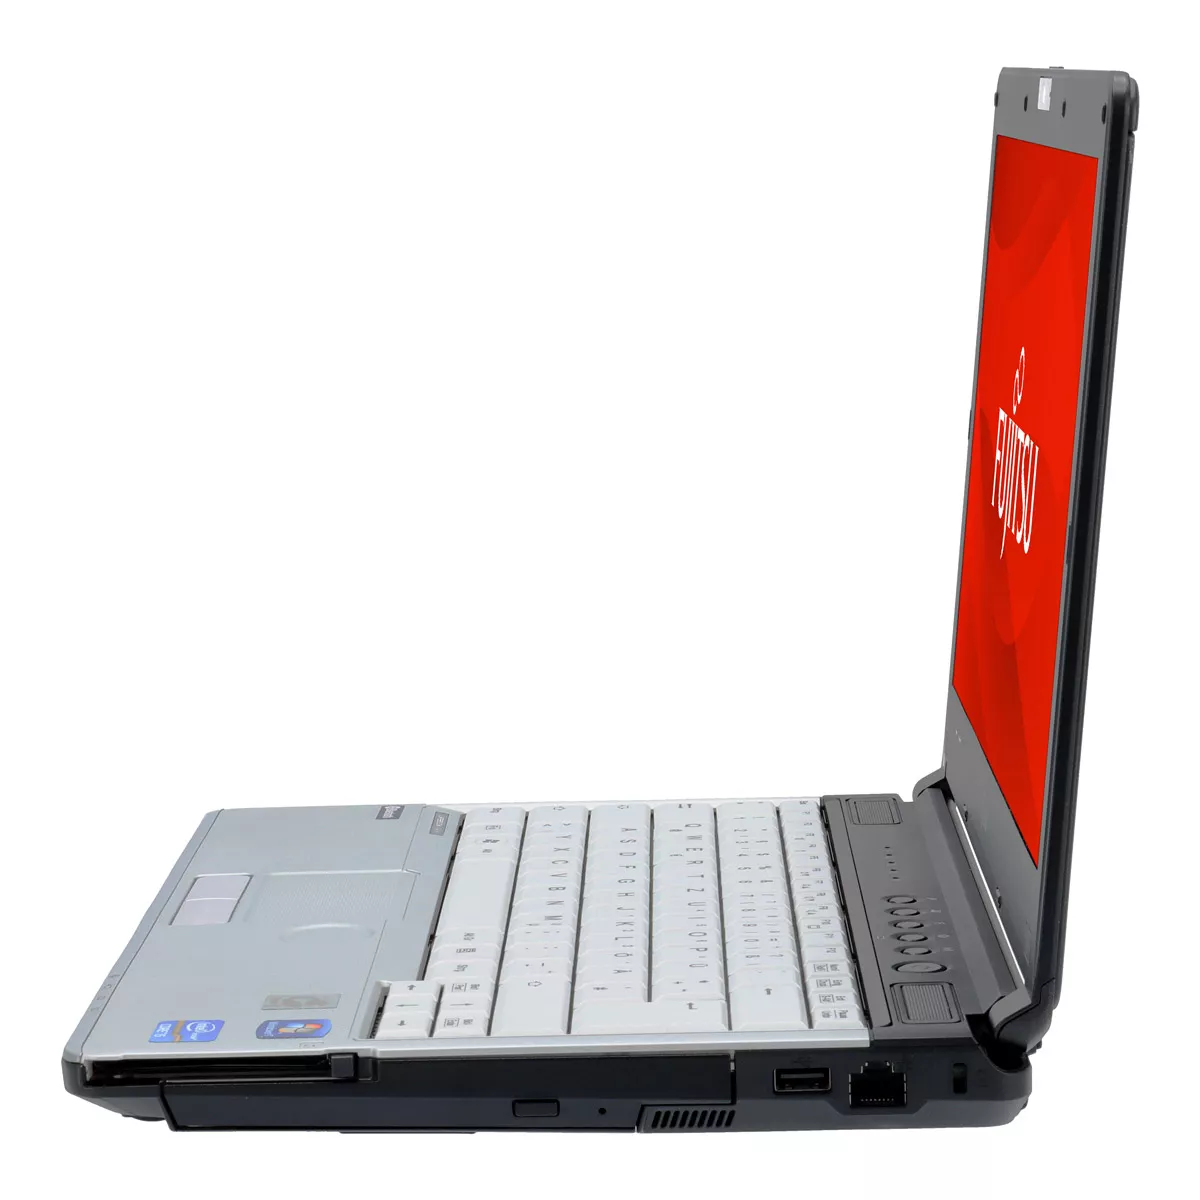 Fujitsu Lifebook S761 Core i5 2520M 2,50 GHz 128 GB SSD Webcam A+